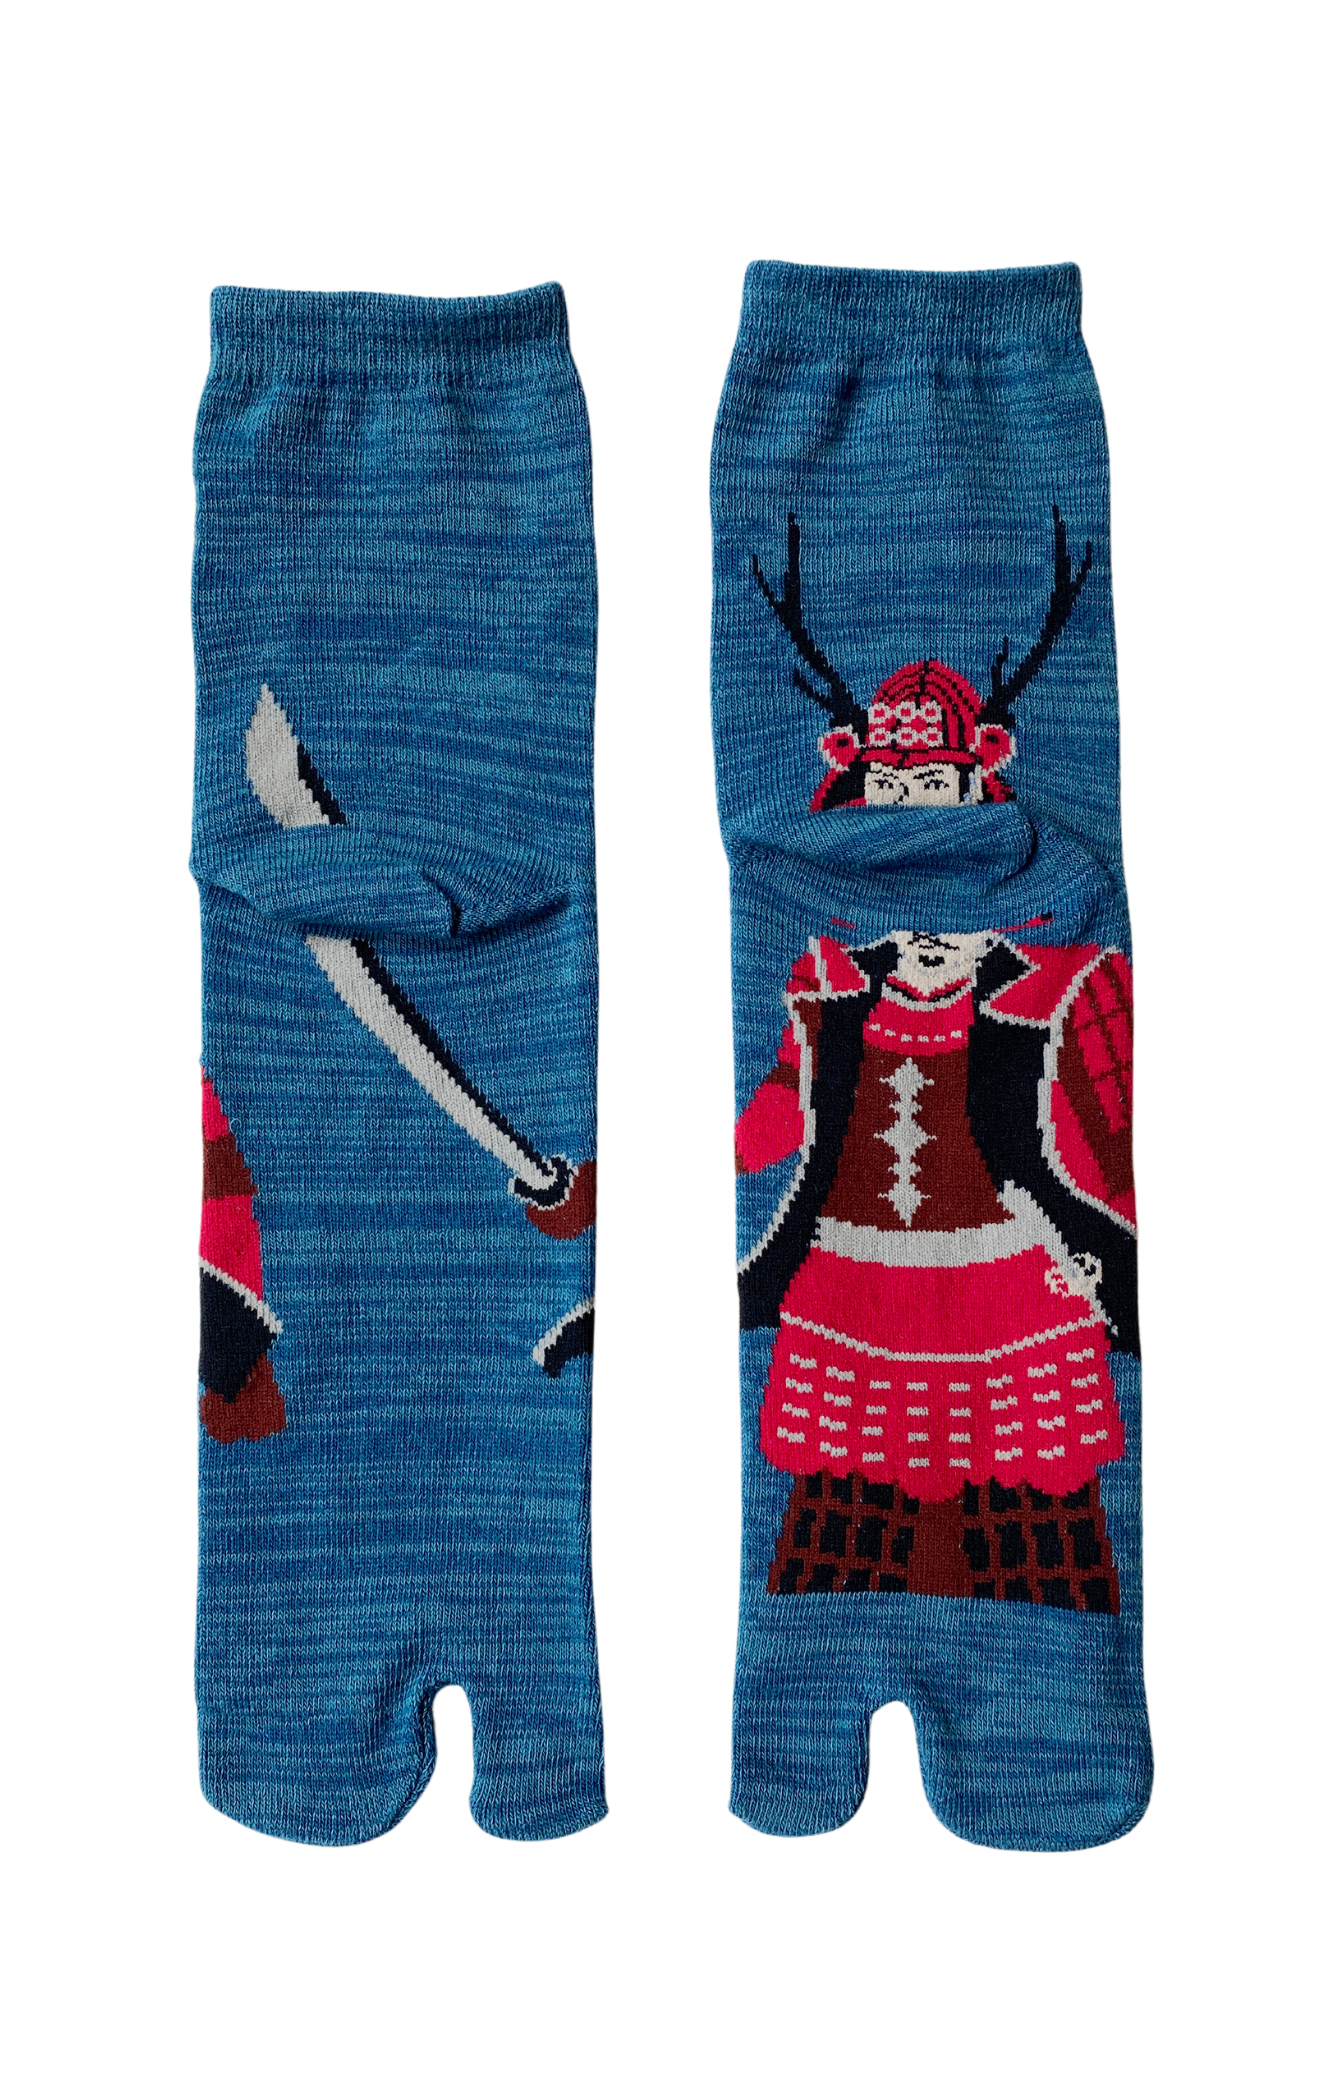 5393 samurai toe socks